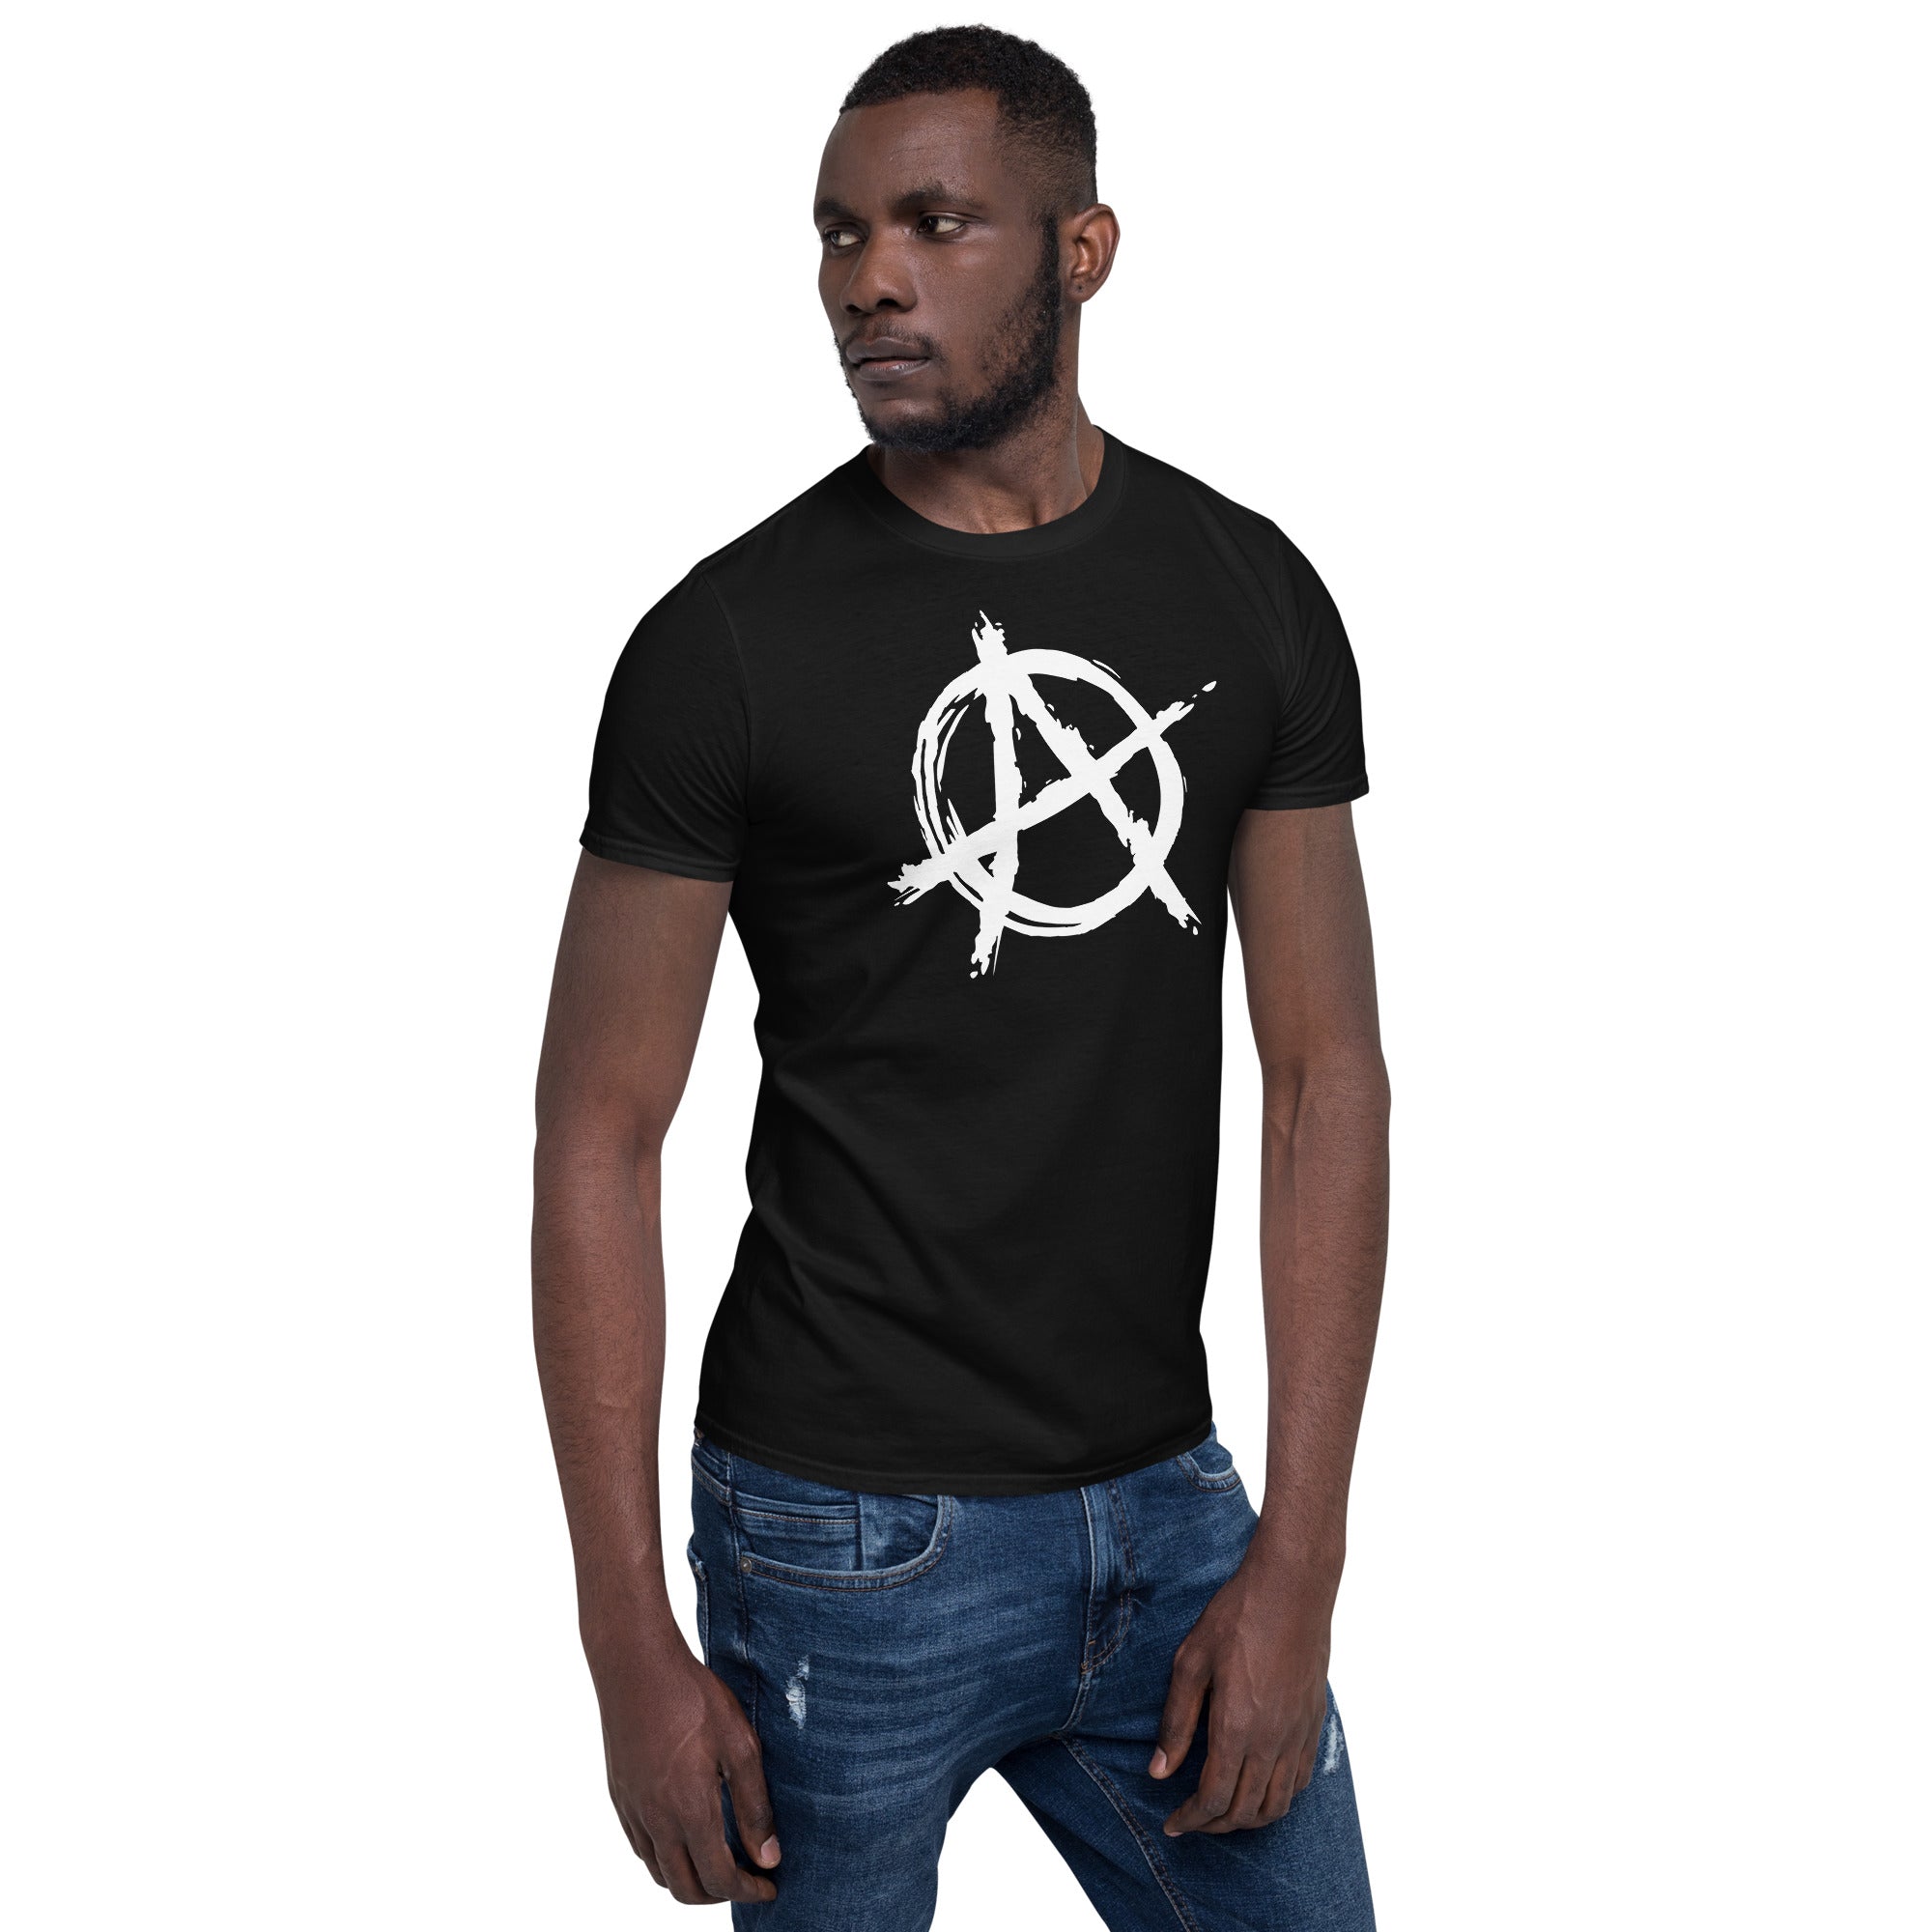 White Anarchy is Order Symbol Punk Rock Men's Short-Sleeve T-Shirt - Edge of Life Designs